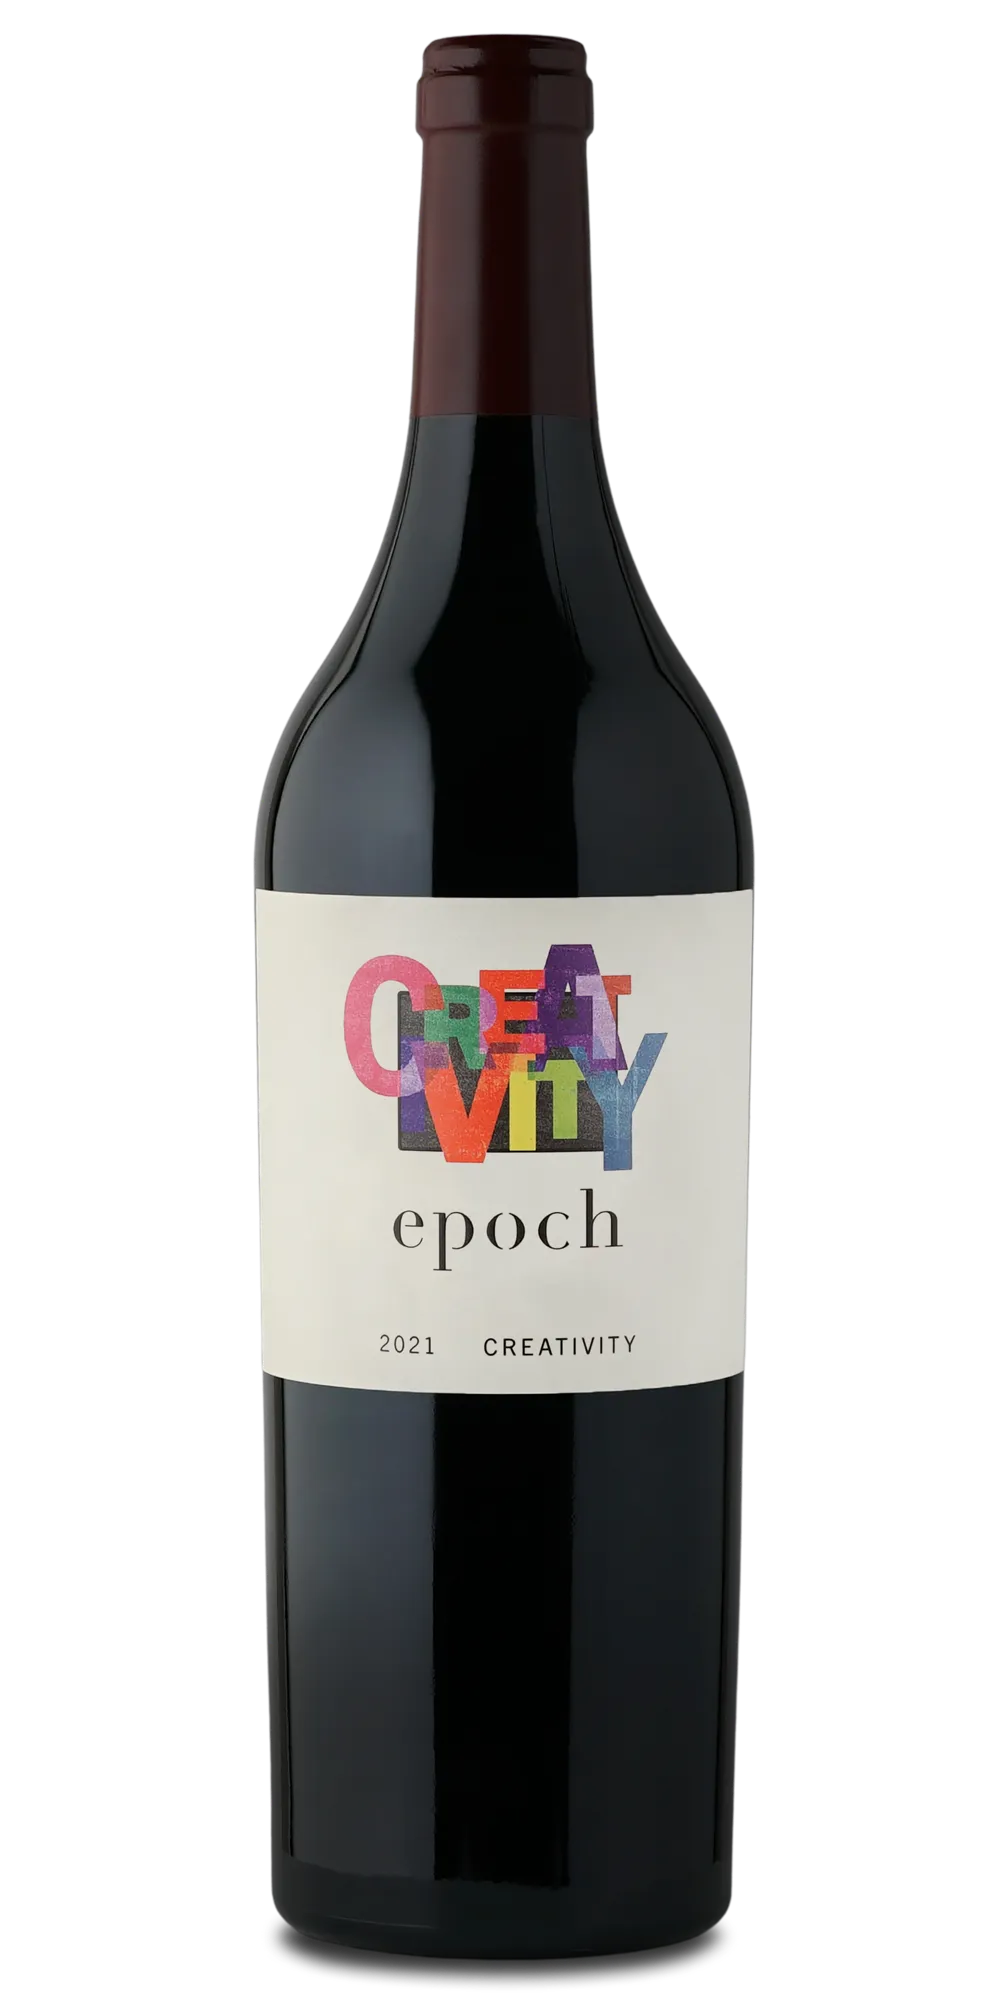 Bottle of 2021 Epoch Creativity